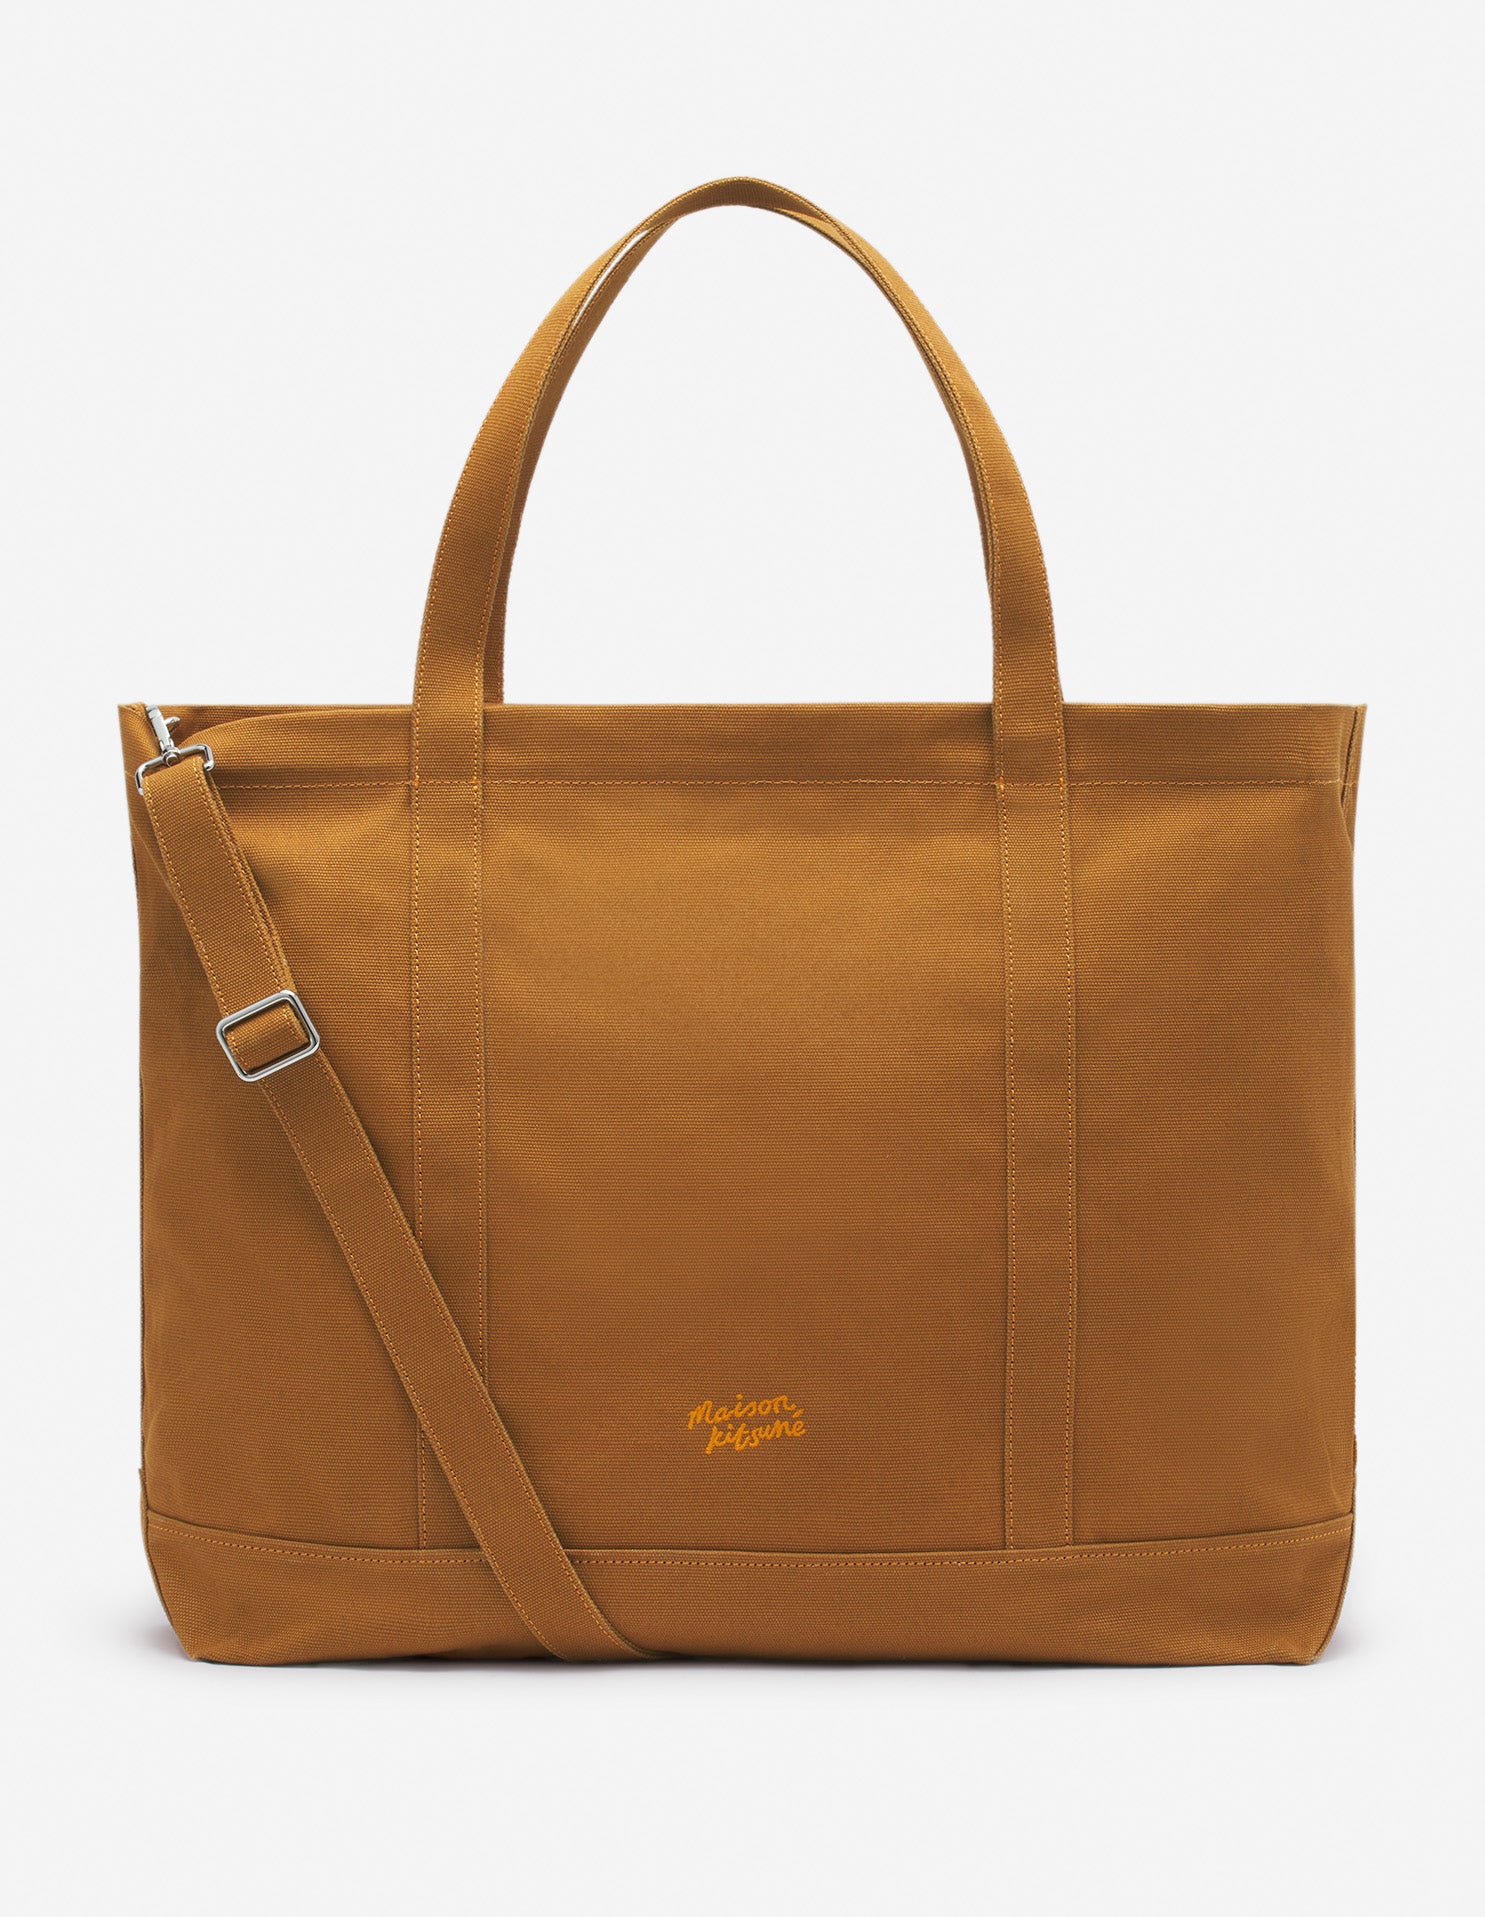 Maison Kitsune Bold Fox Head XL Tote Bag Golden Brown LW05105WW0083 P236